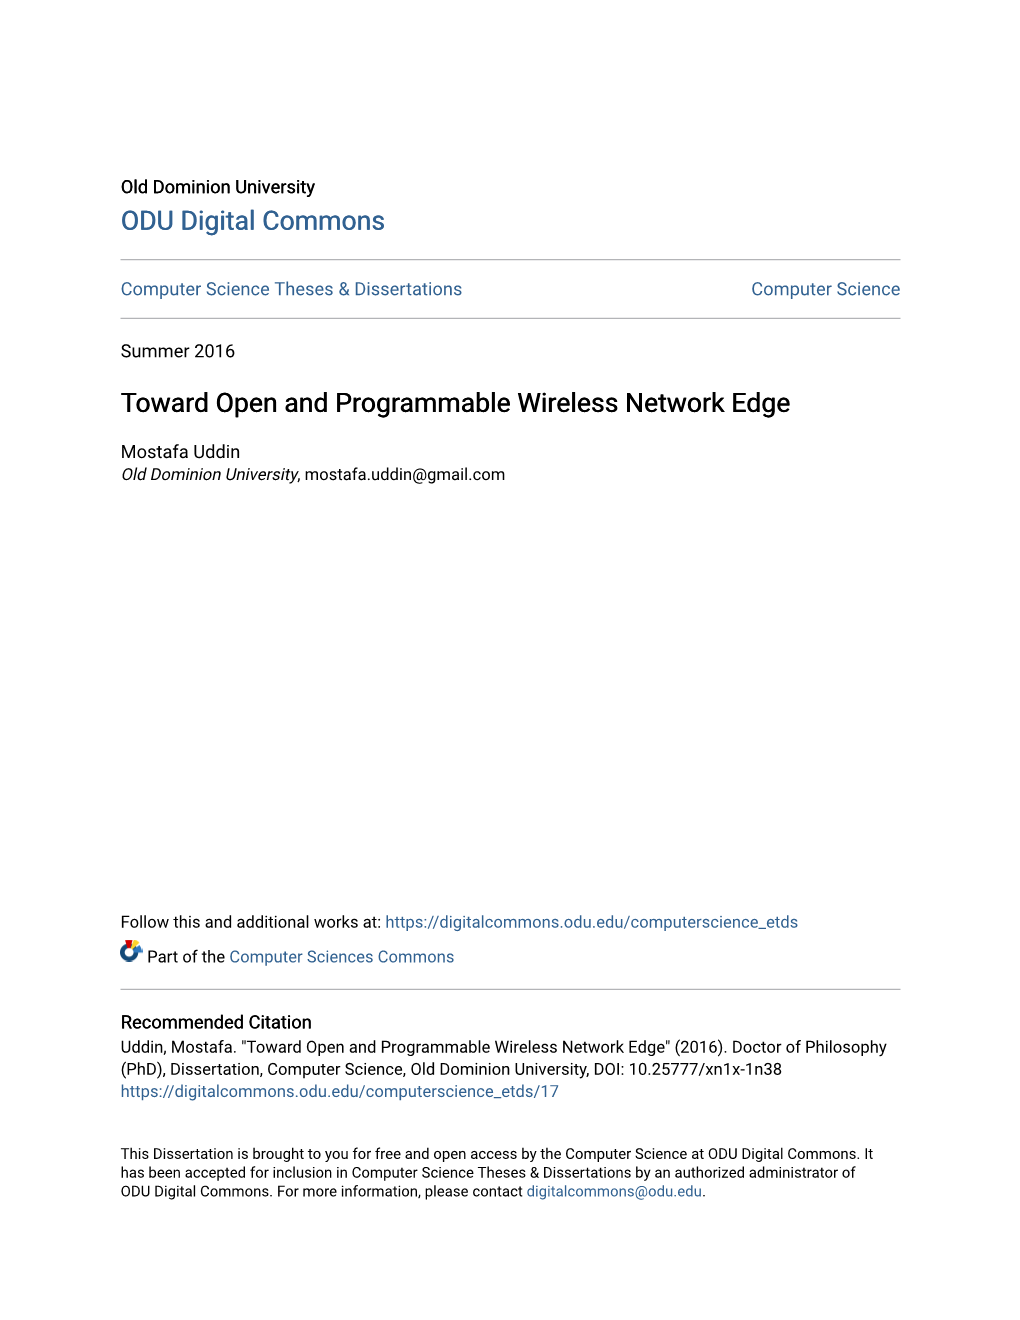 Toward Open and Programmable Wireless Network Edge